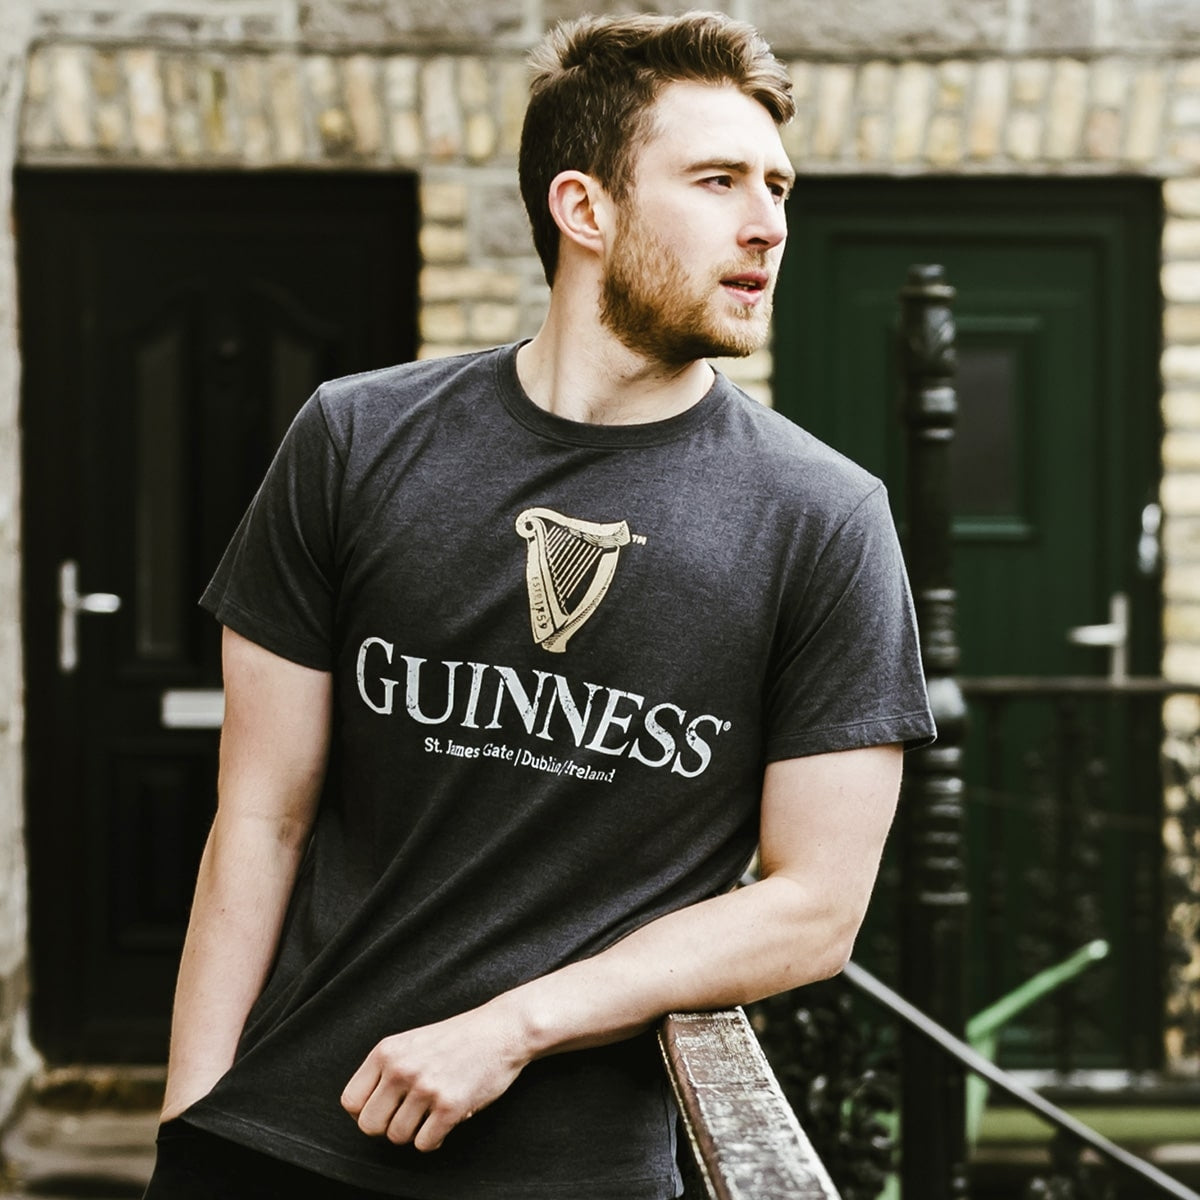 Guinness Navy Distressed Harp Logo T-Shirt